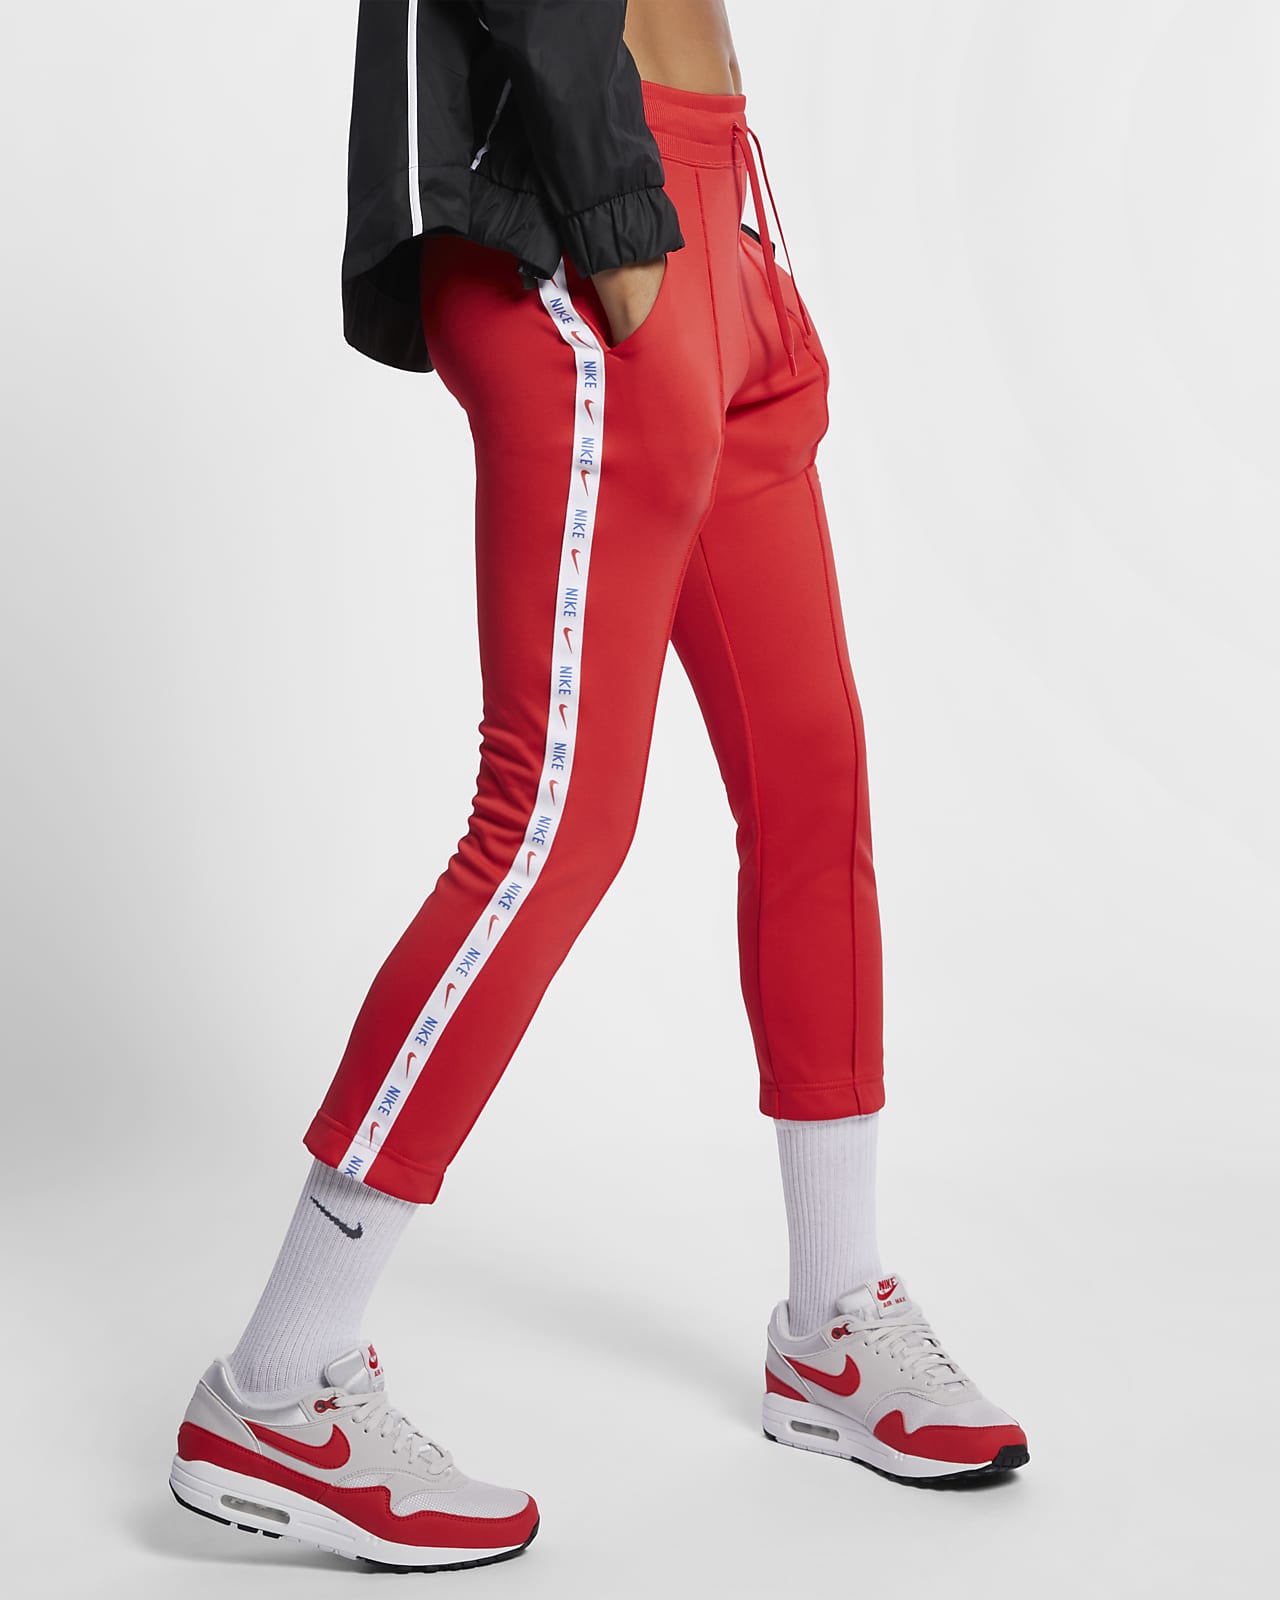 SUPER Nike red-label vintage AthDpt slicker / track pants - womens S